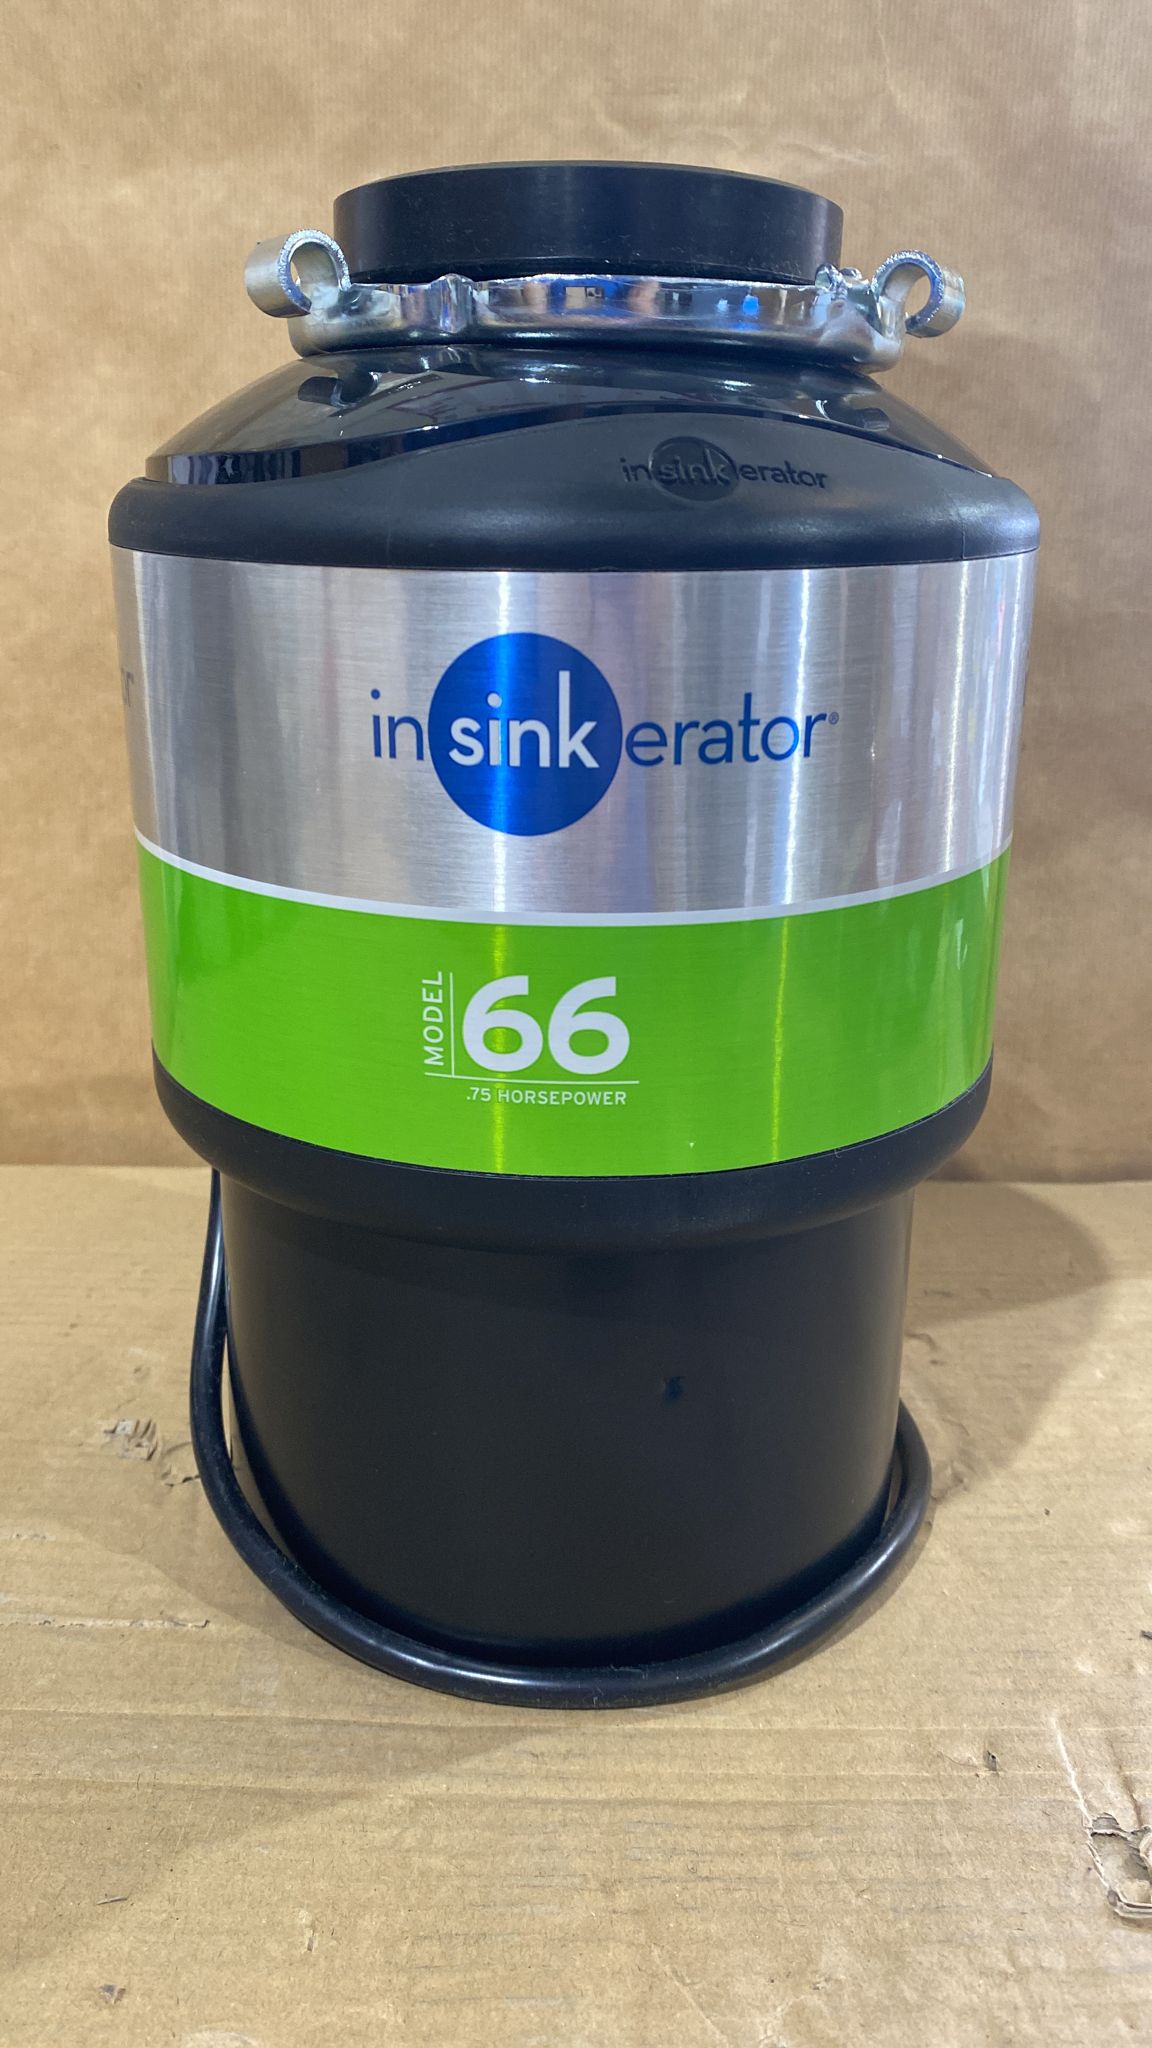 InSinkErator Model 66 Kitchen sink waste disposer 0080